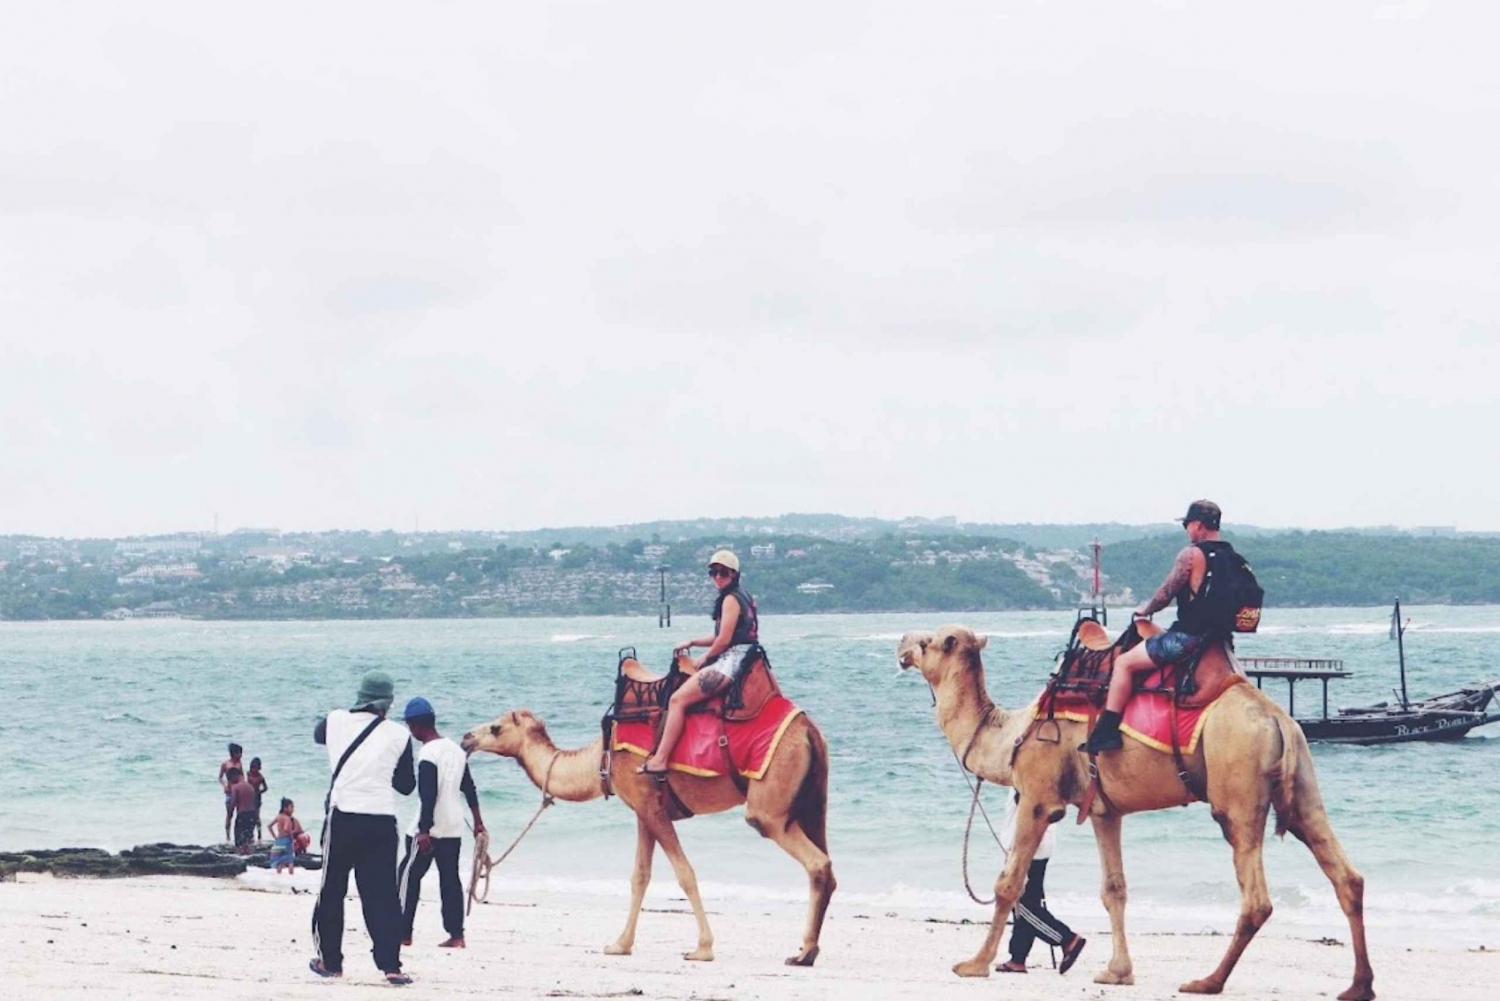 Bali: Kelan Beach Camel Rides Experiences